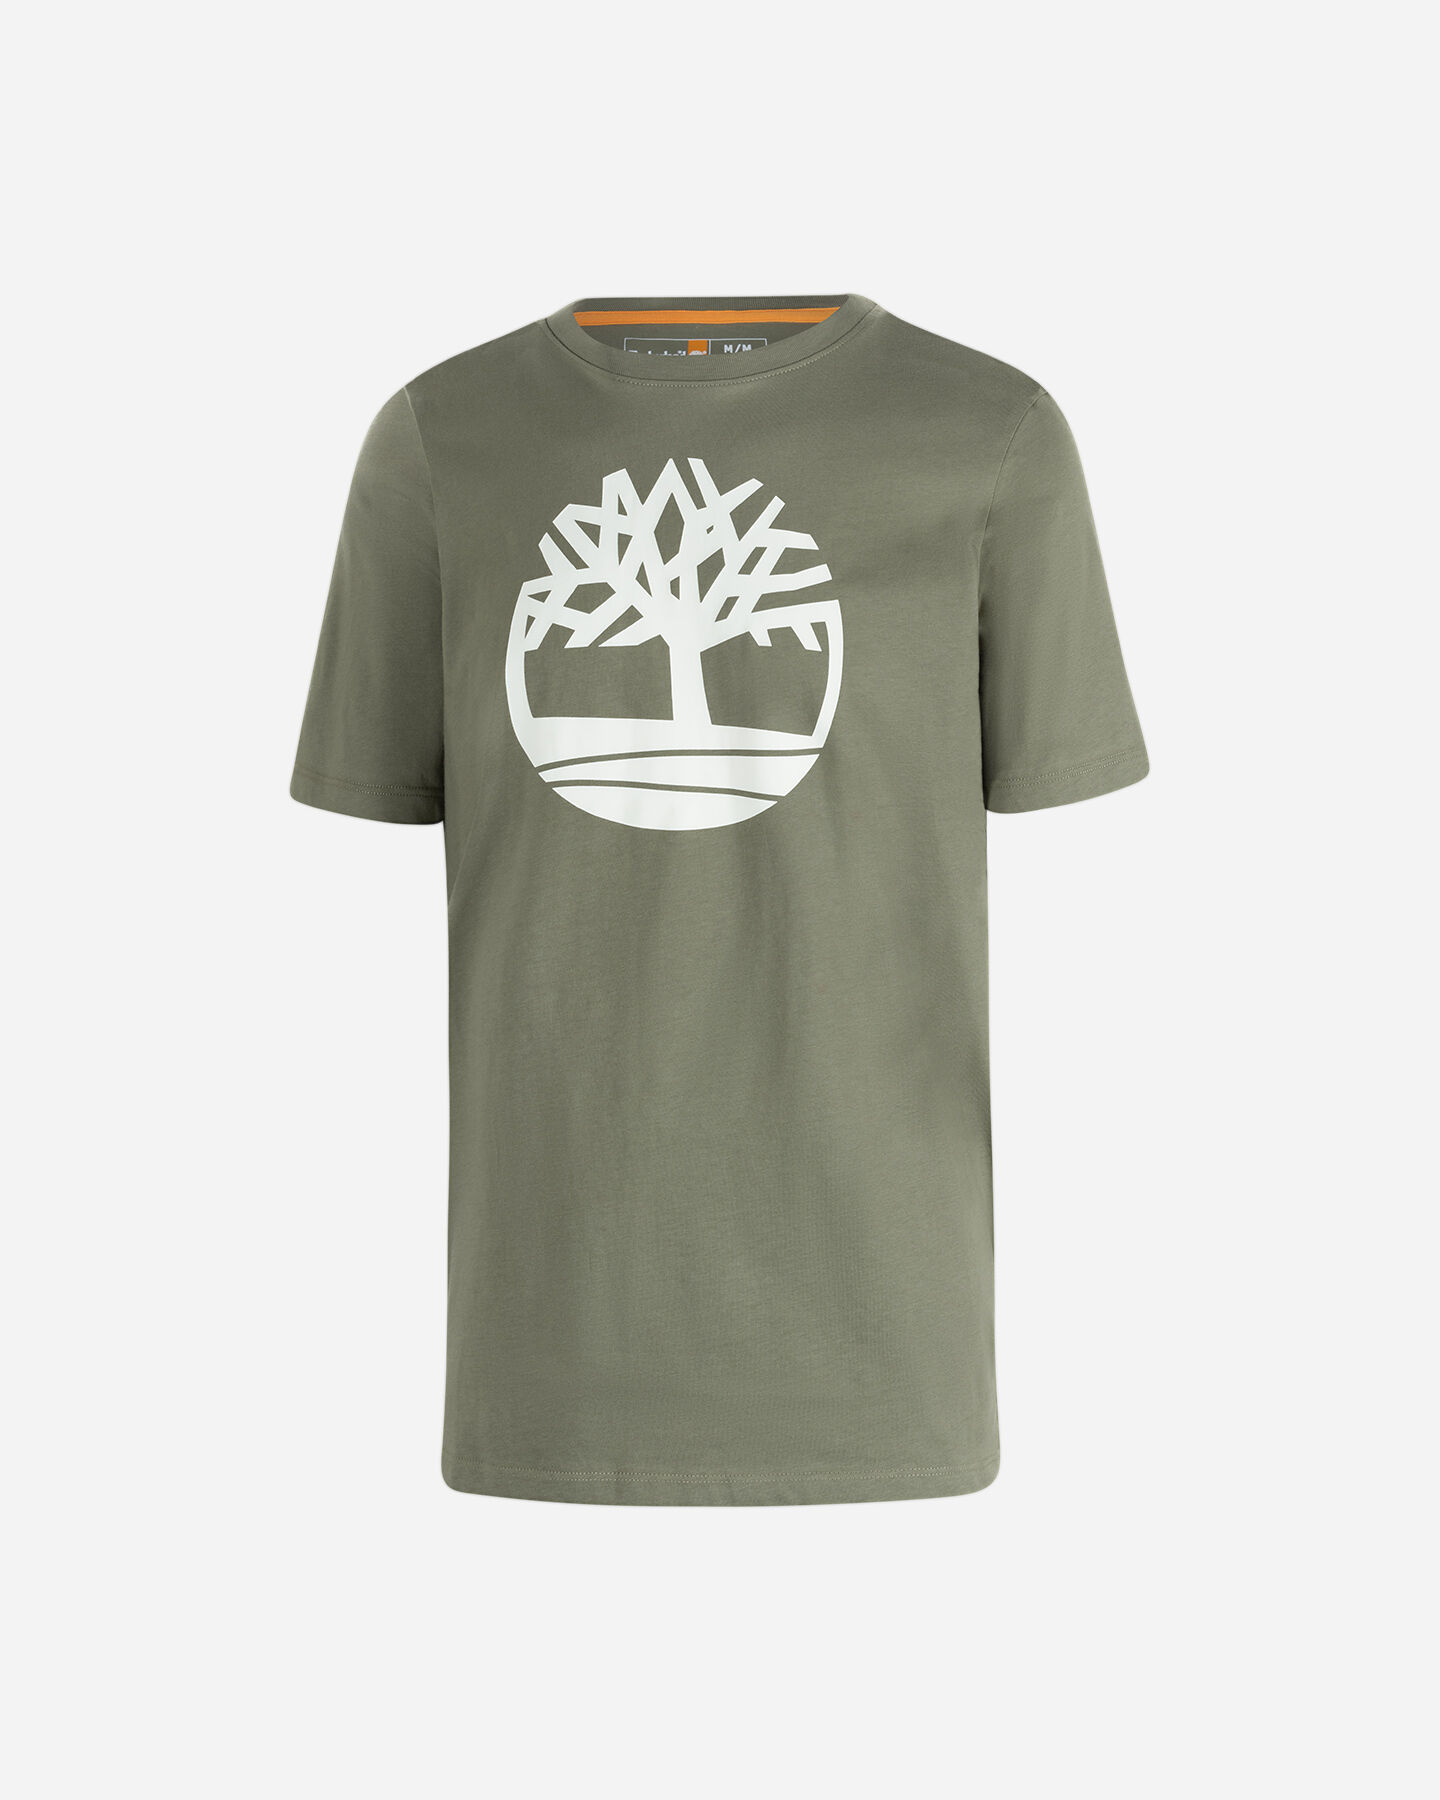  T-Shirt TIMBERLAND BRAND TREE M S4122611|5901|S scatto 0